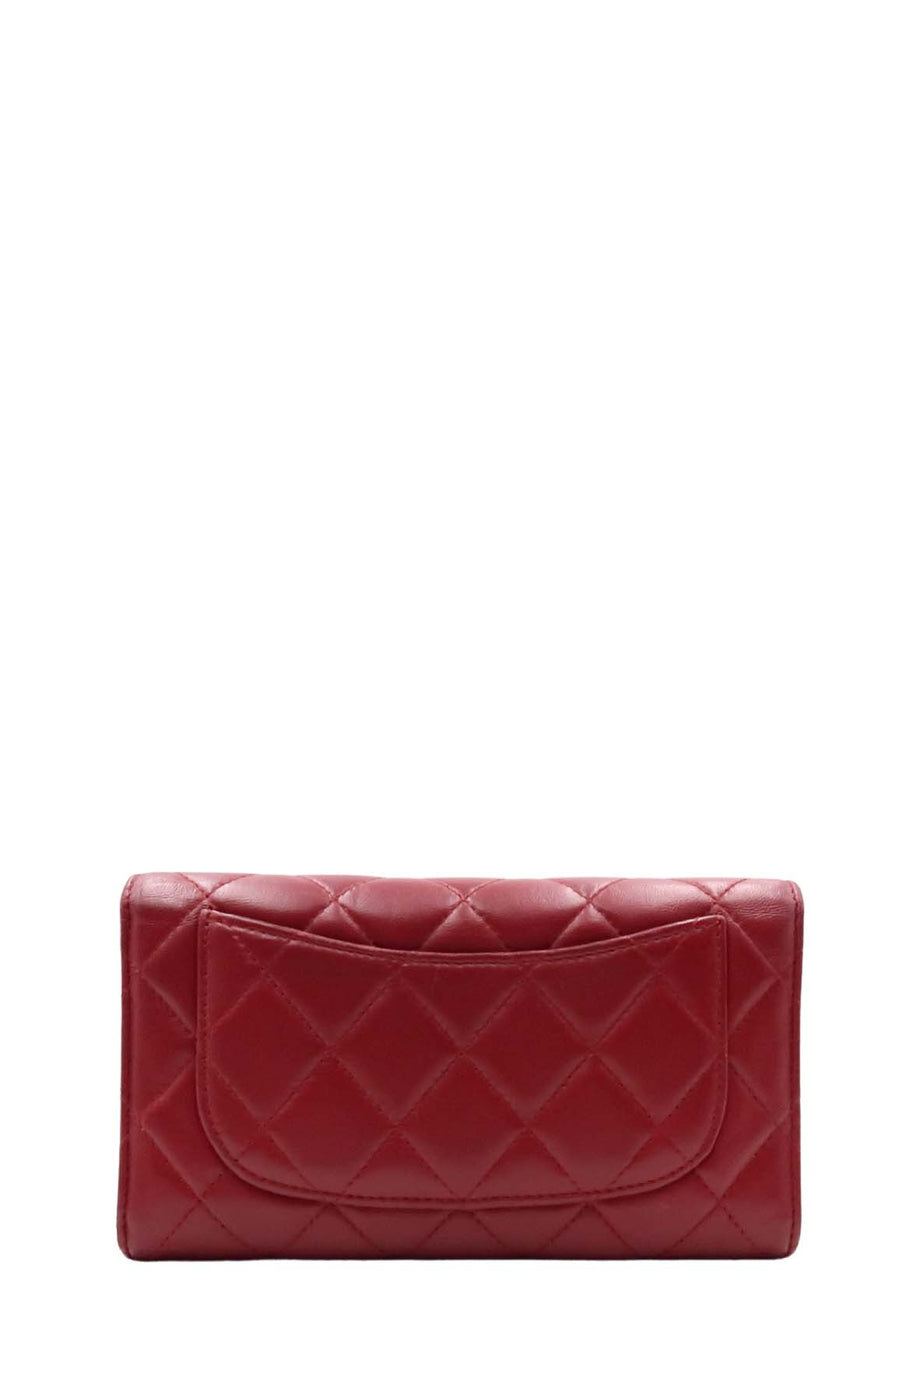 Chanel 2013-2014 Interlocking CC Logo Card Holder - Red Wallets